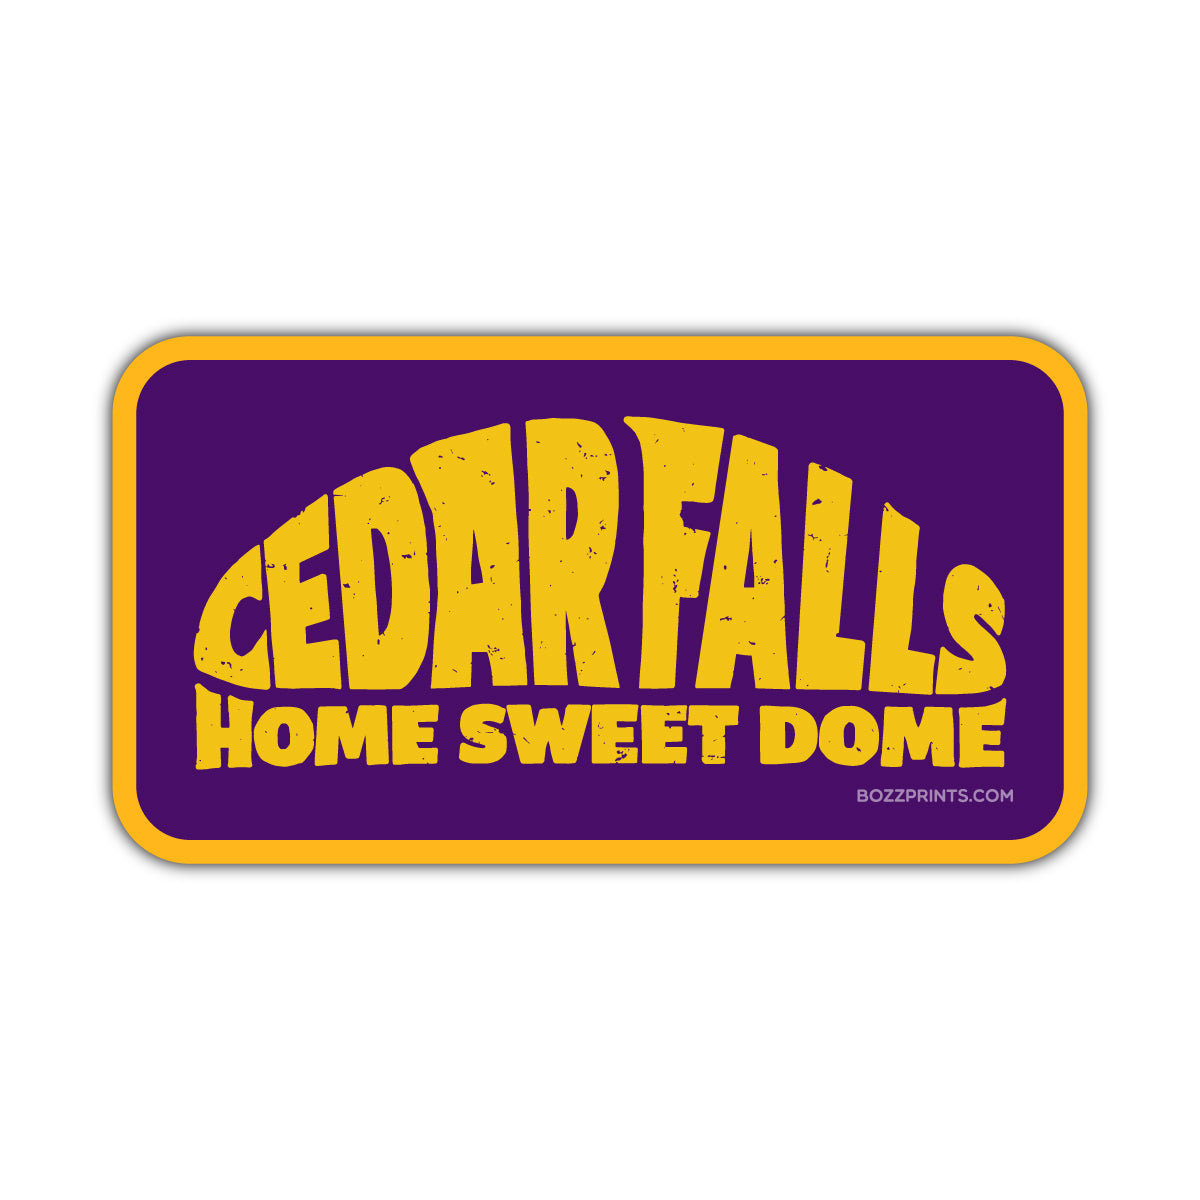 Cedar Falls Home Sweet Dome - Bozz Prints